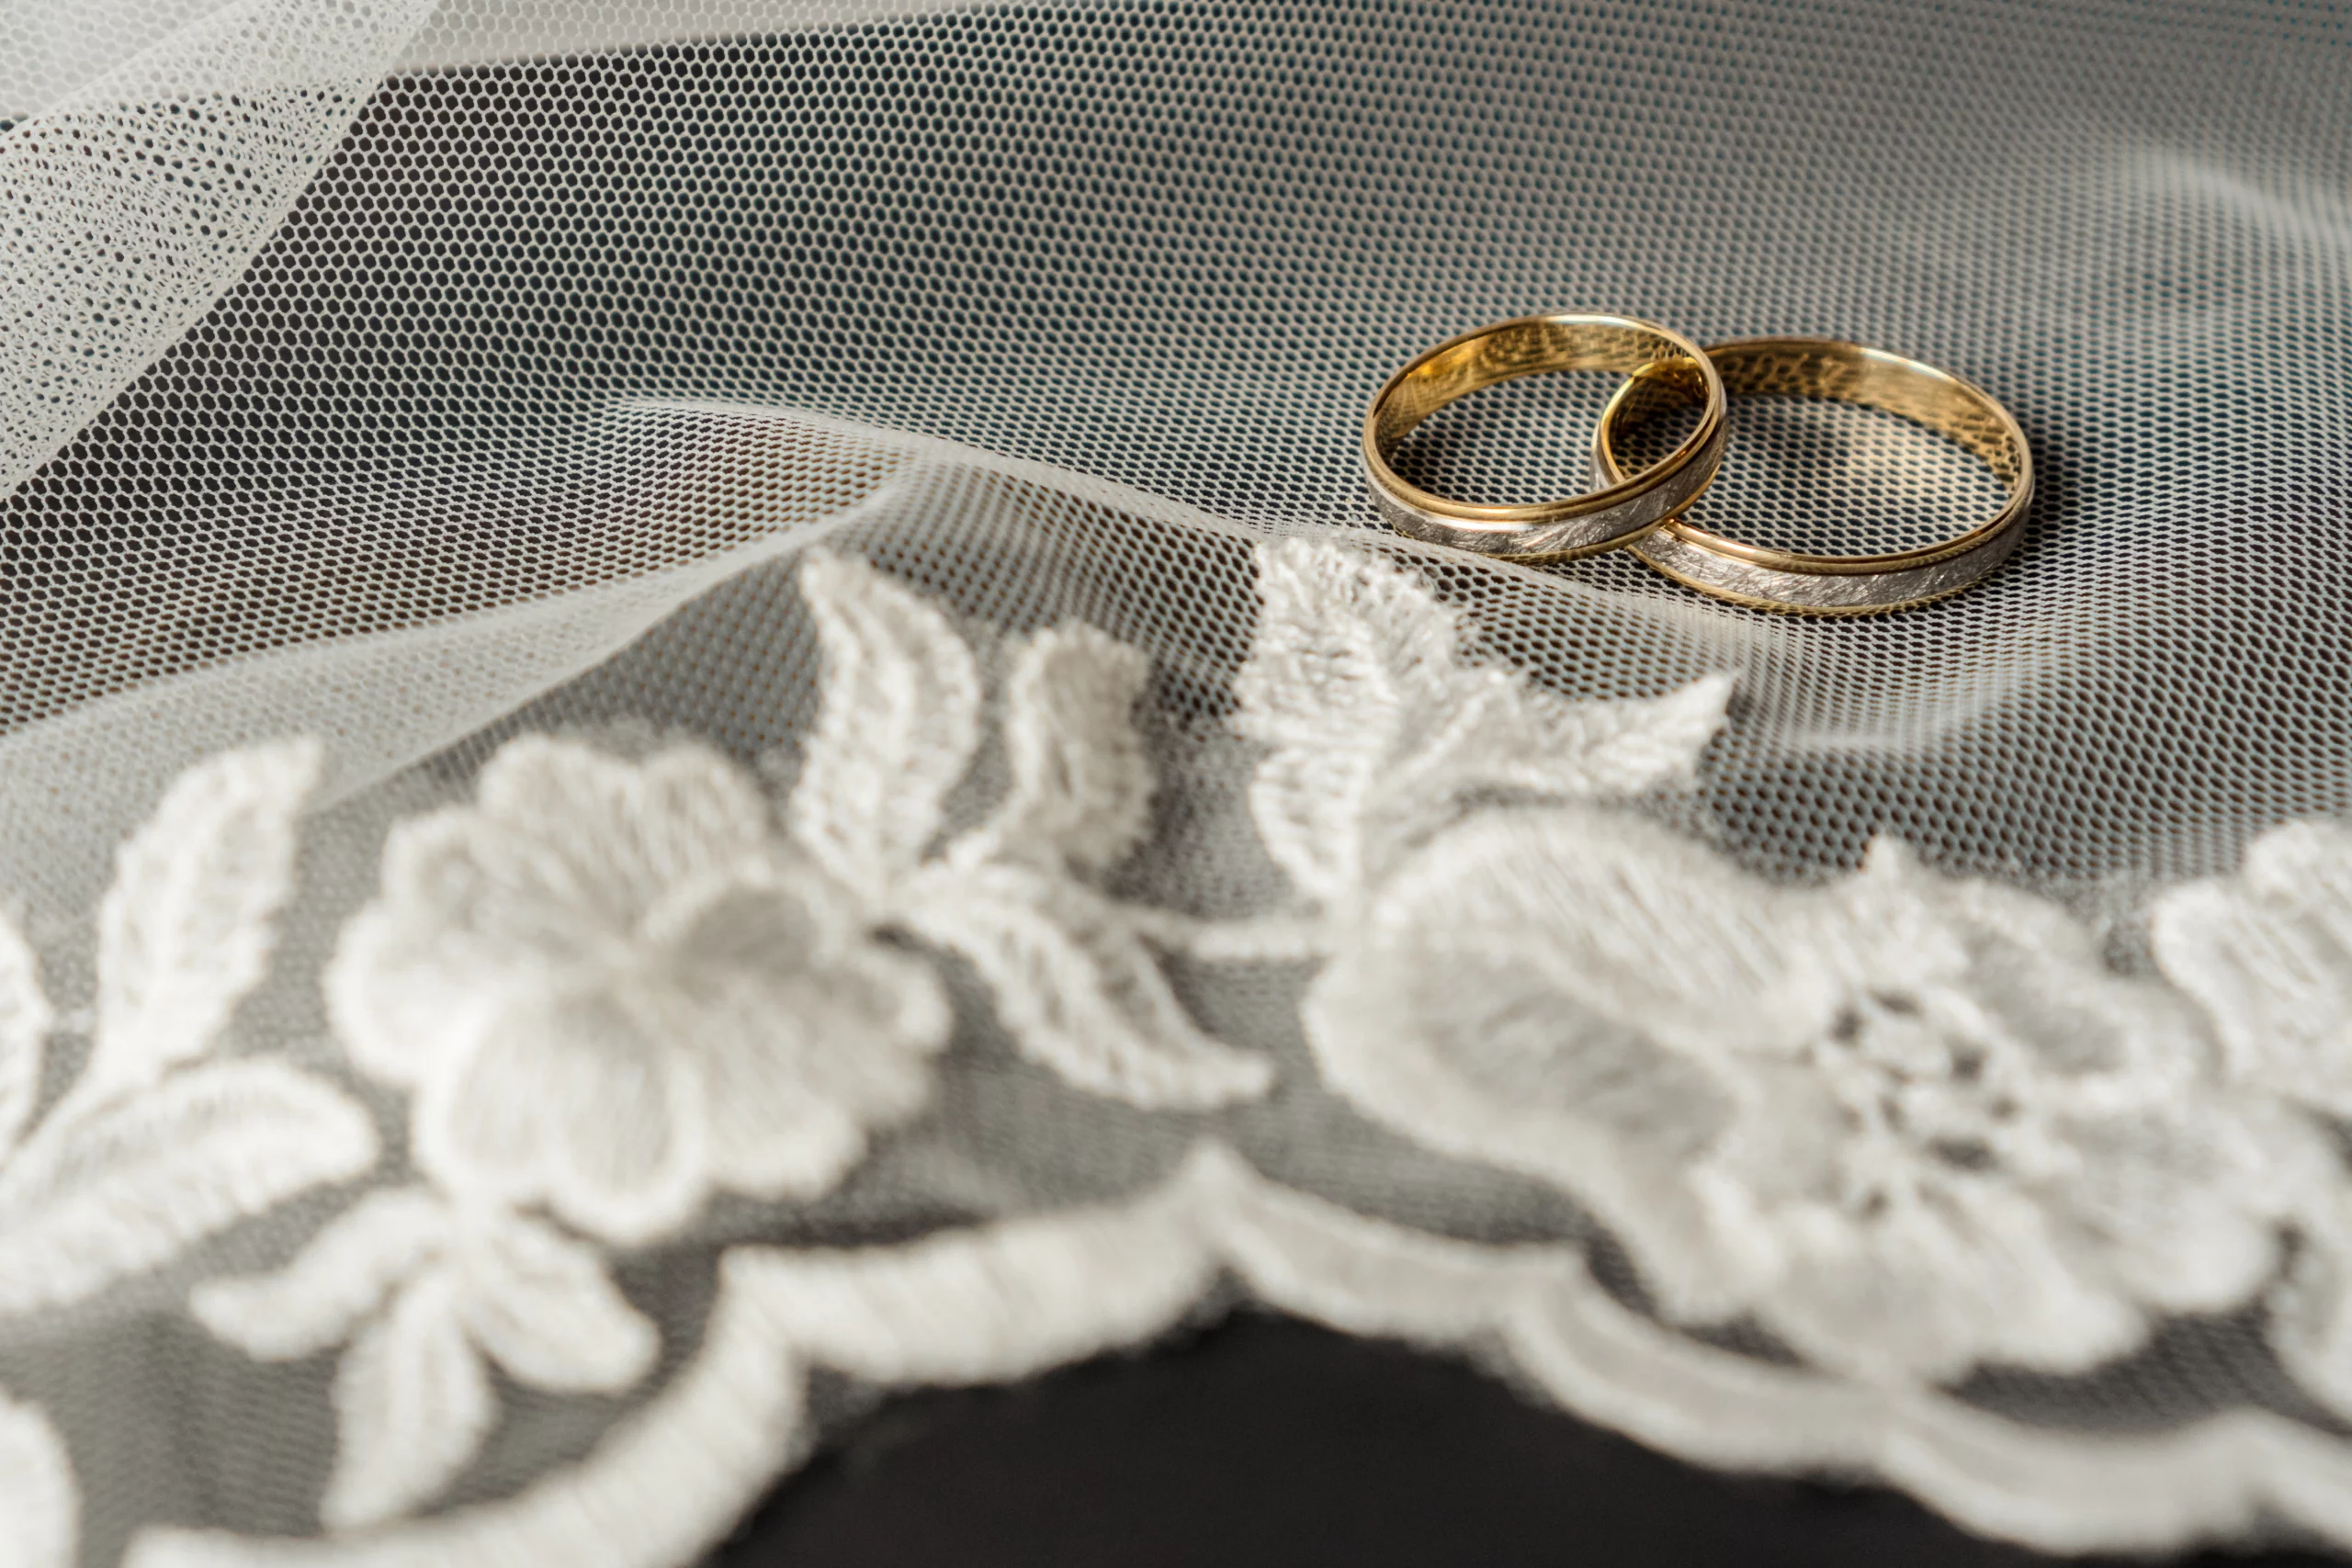 Cheap wedding ideas; alternative wedding ring ideas | Swoosh Finance